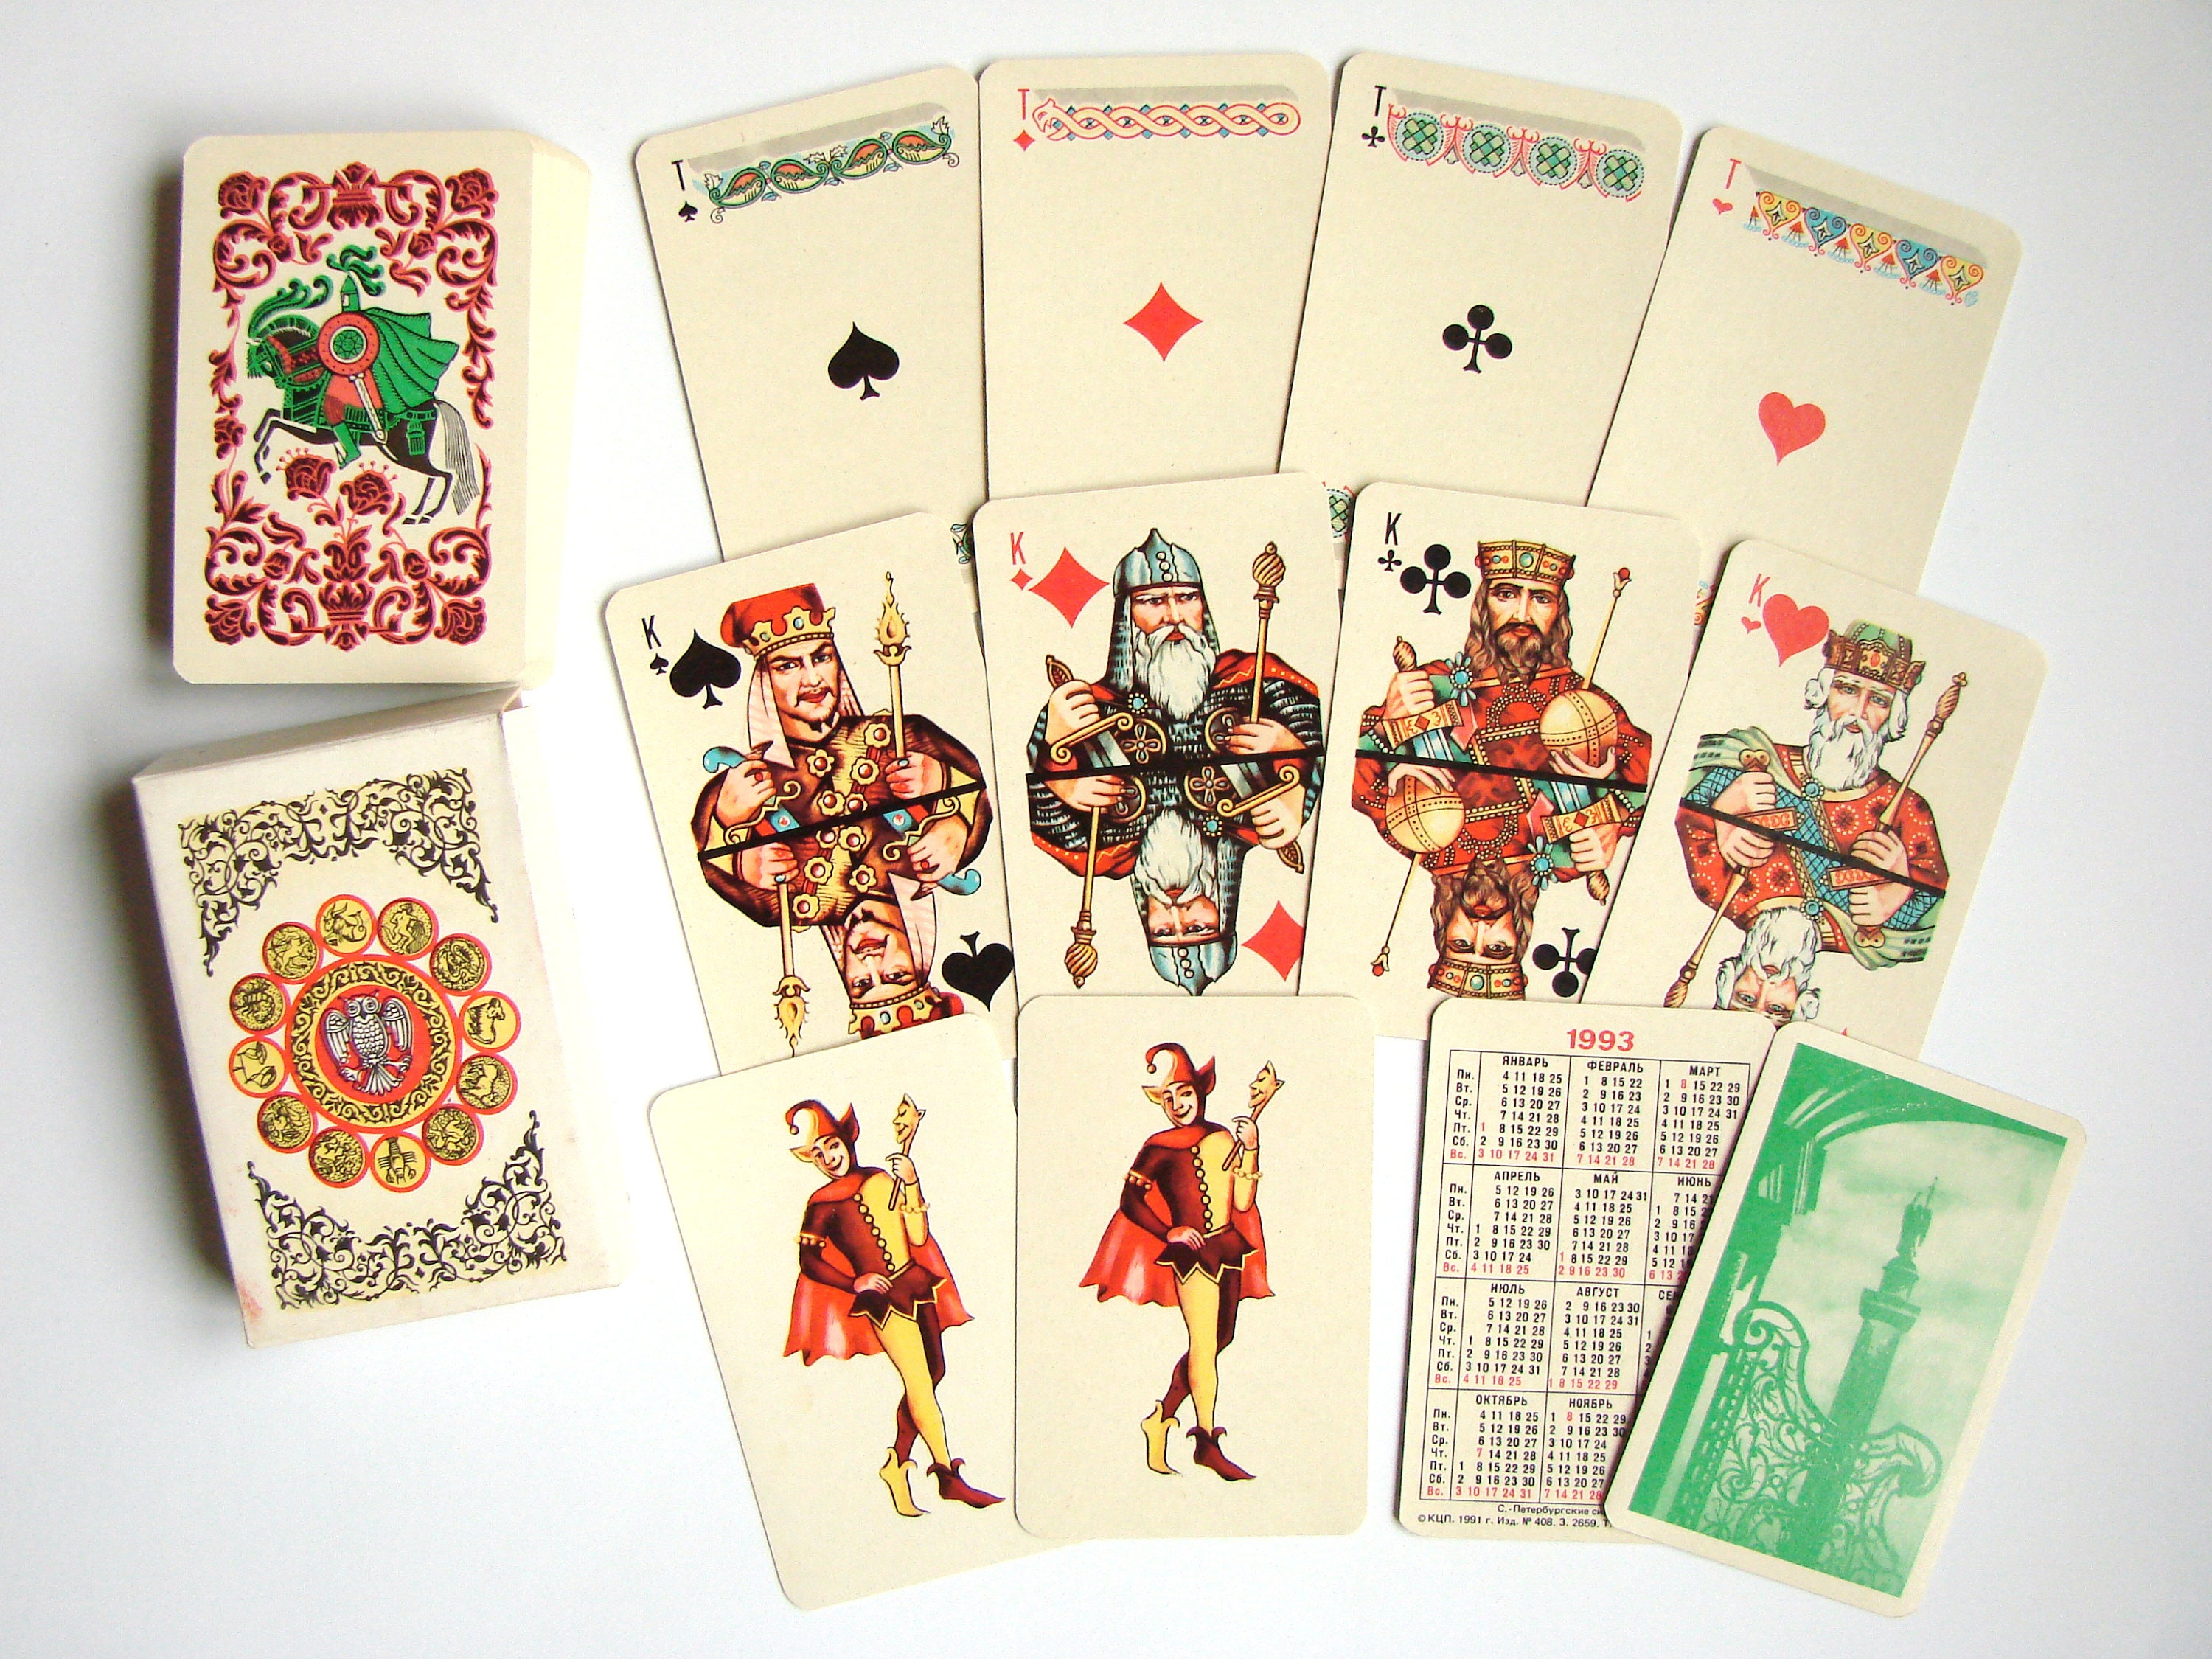 Playing Card Set - '90s